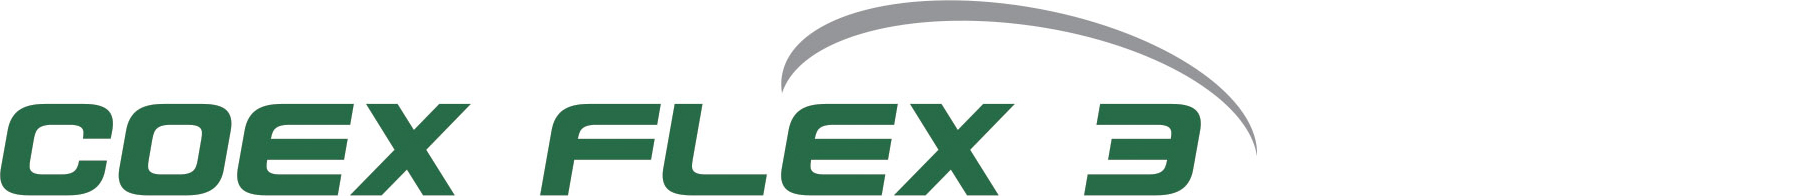 COEX FLEX 3